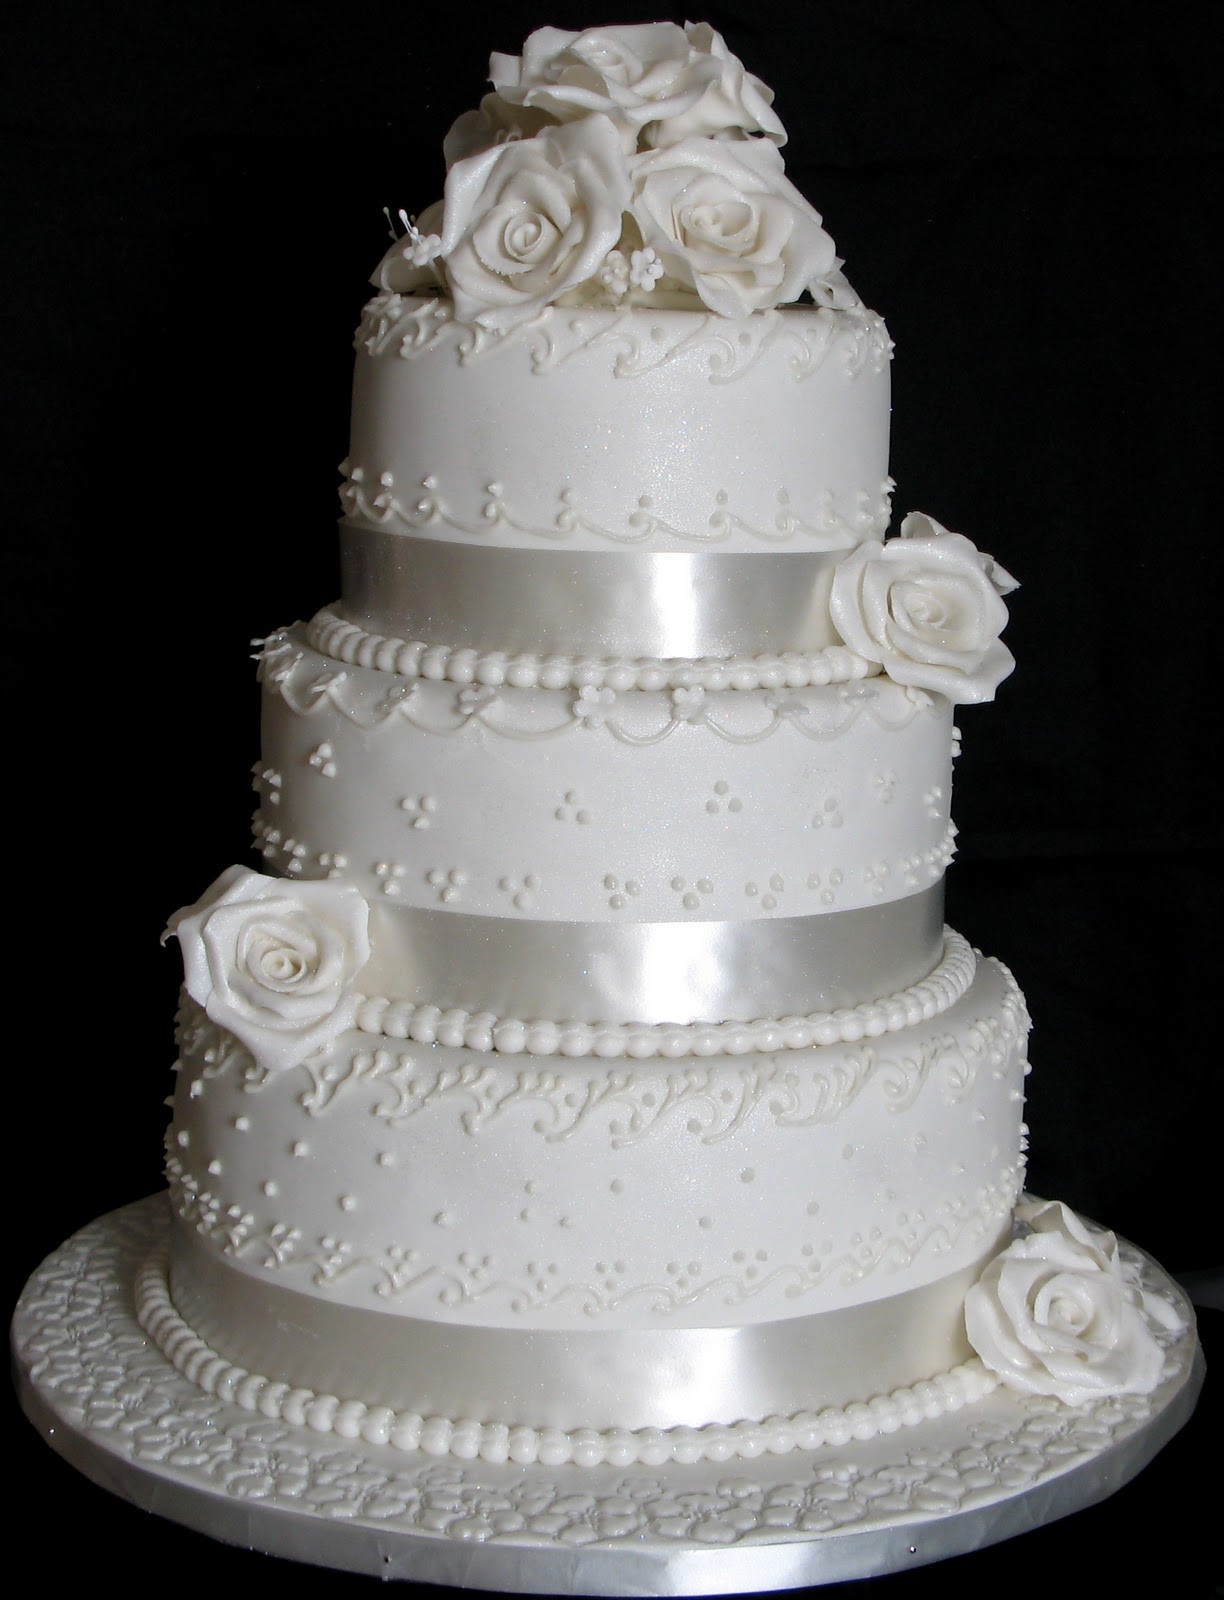 Layered Wedding Cakes
 3 layered wedding cake idea in 2017